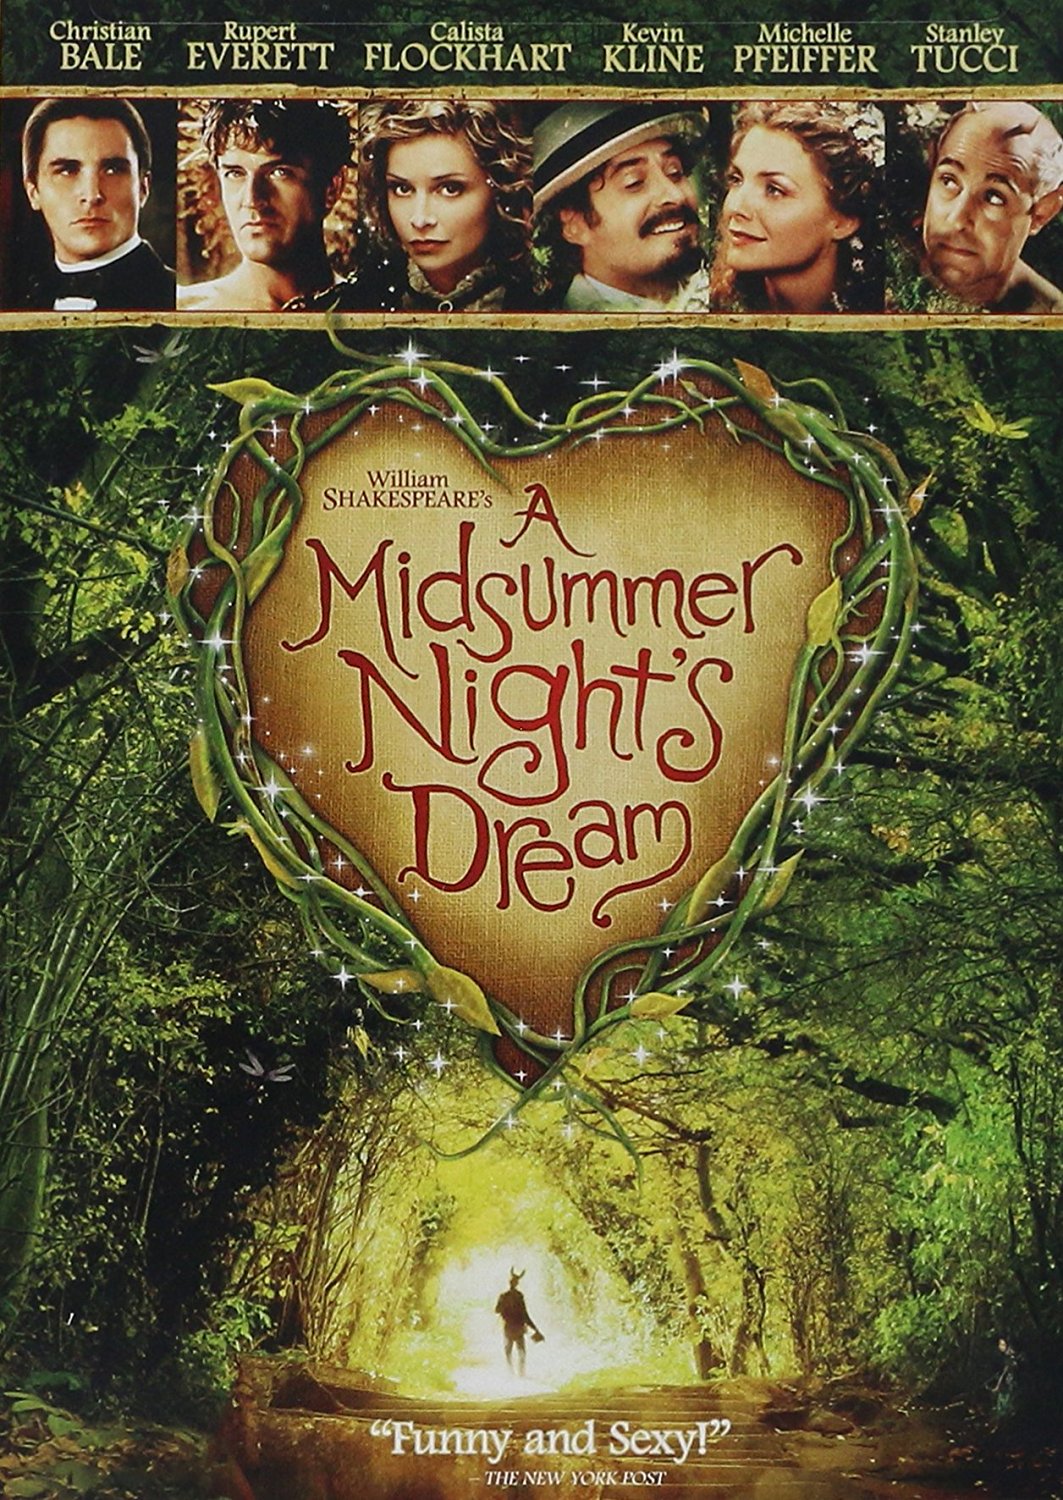 DVD copy of A Midsummer Night's Dream